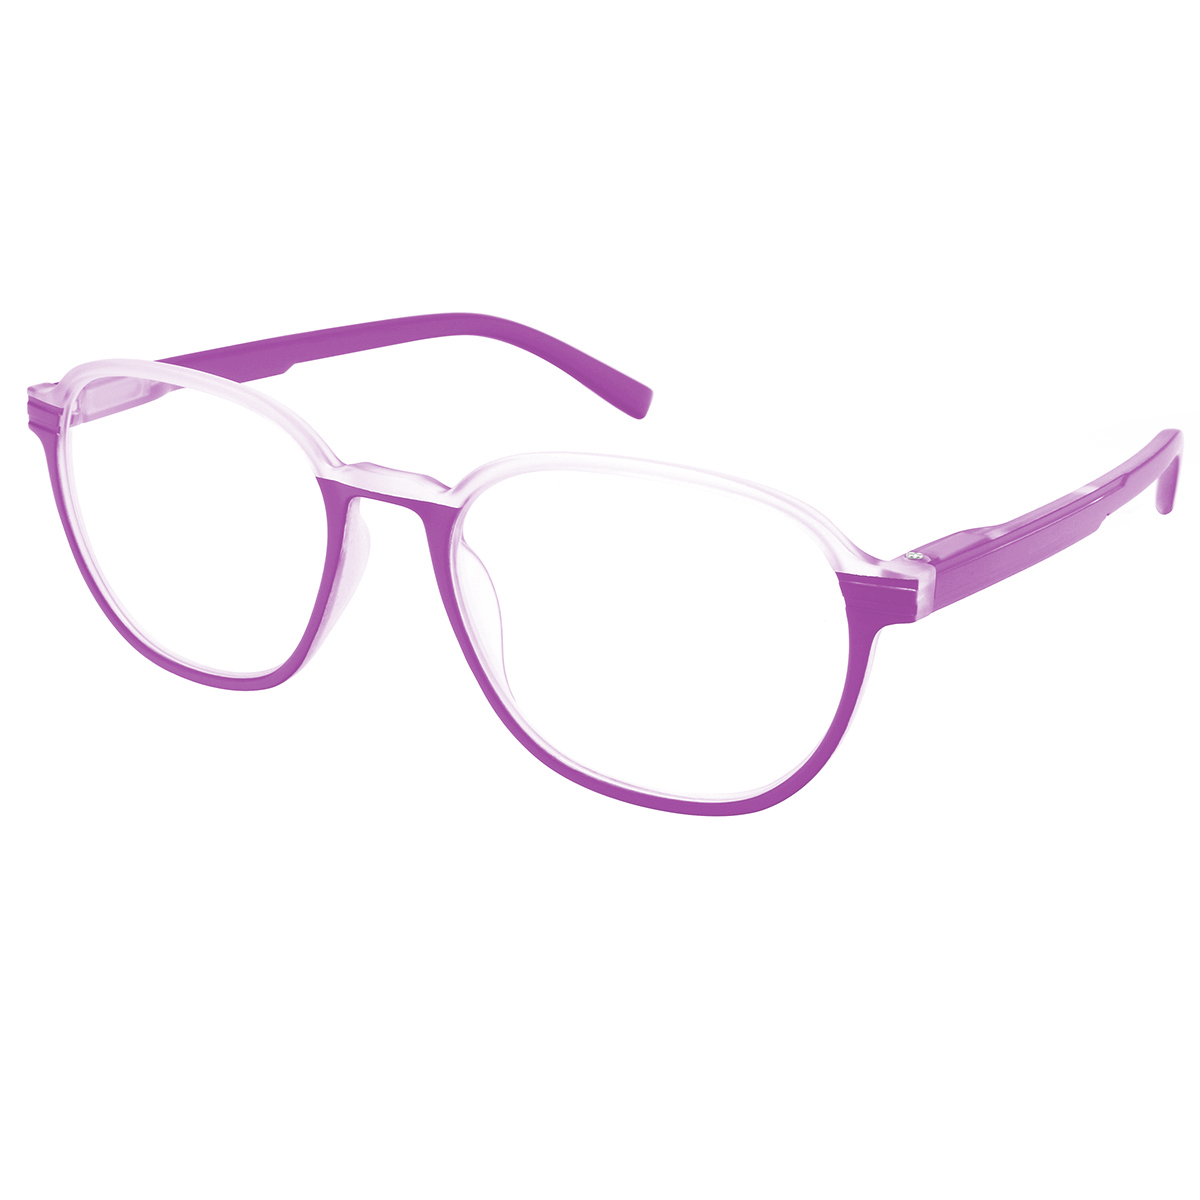 Prism - Round Purple Reading Glasses for Men & Women